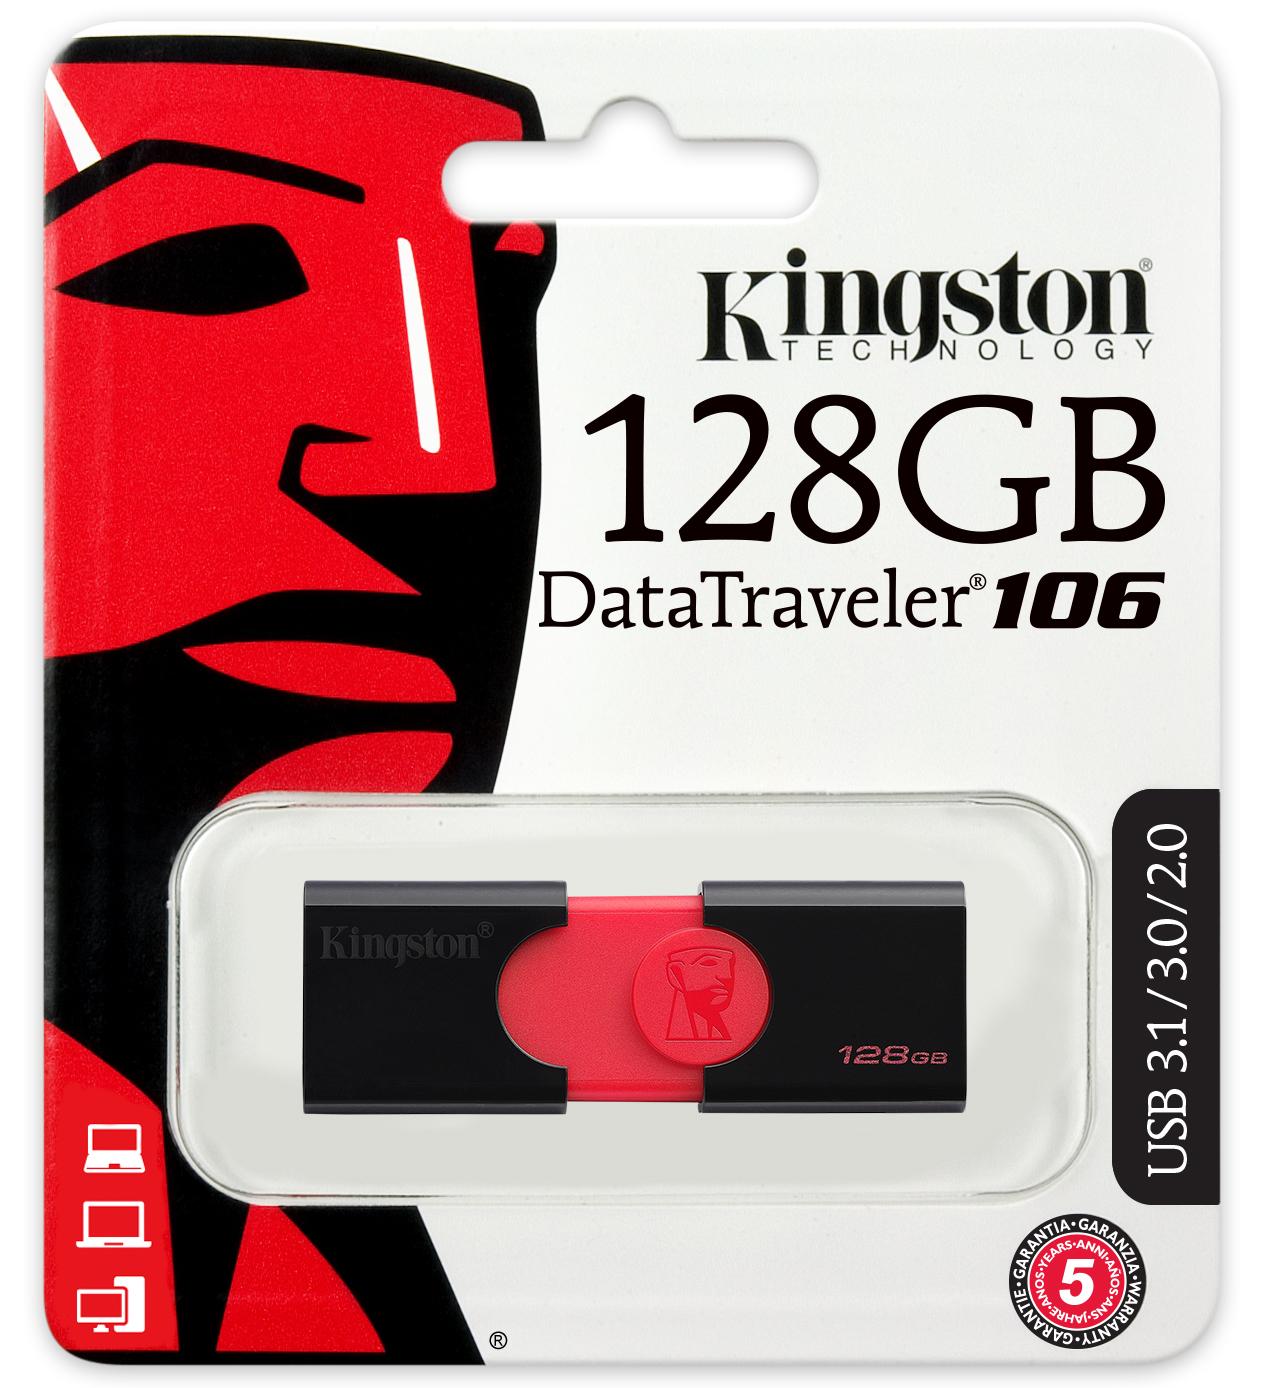 Cl USB 3.0 Kingston DataTraveler 106 128 Go , informatique ile de la runion